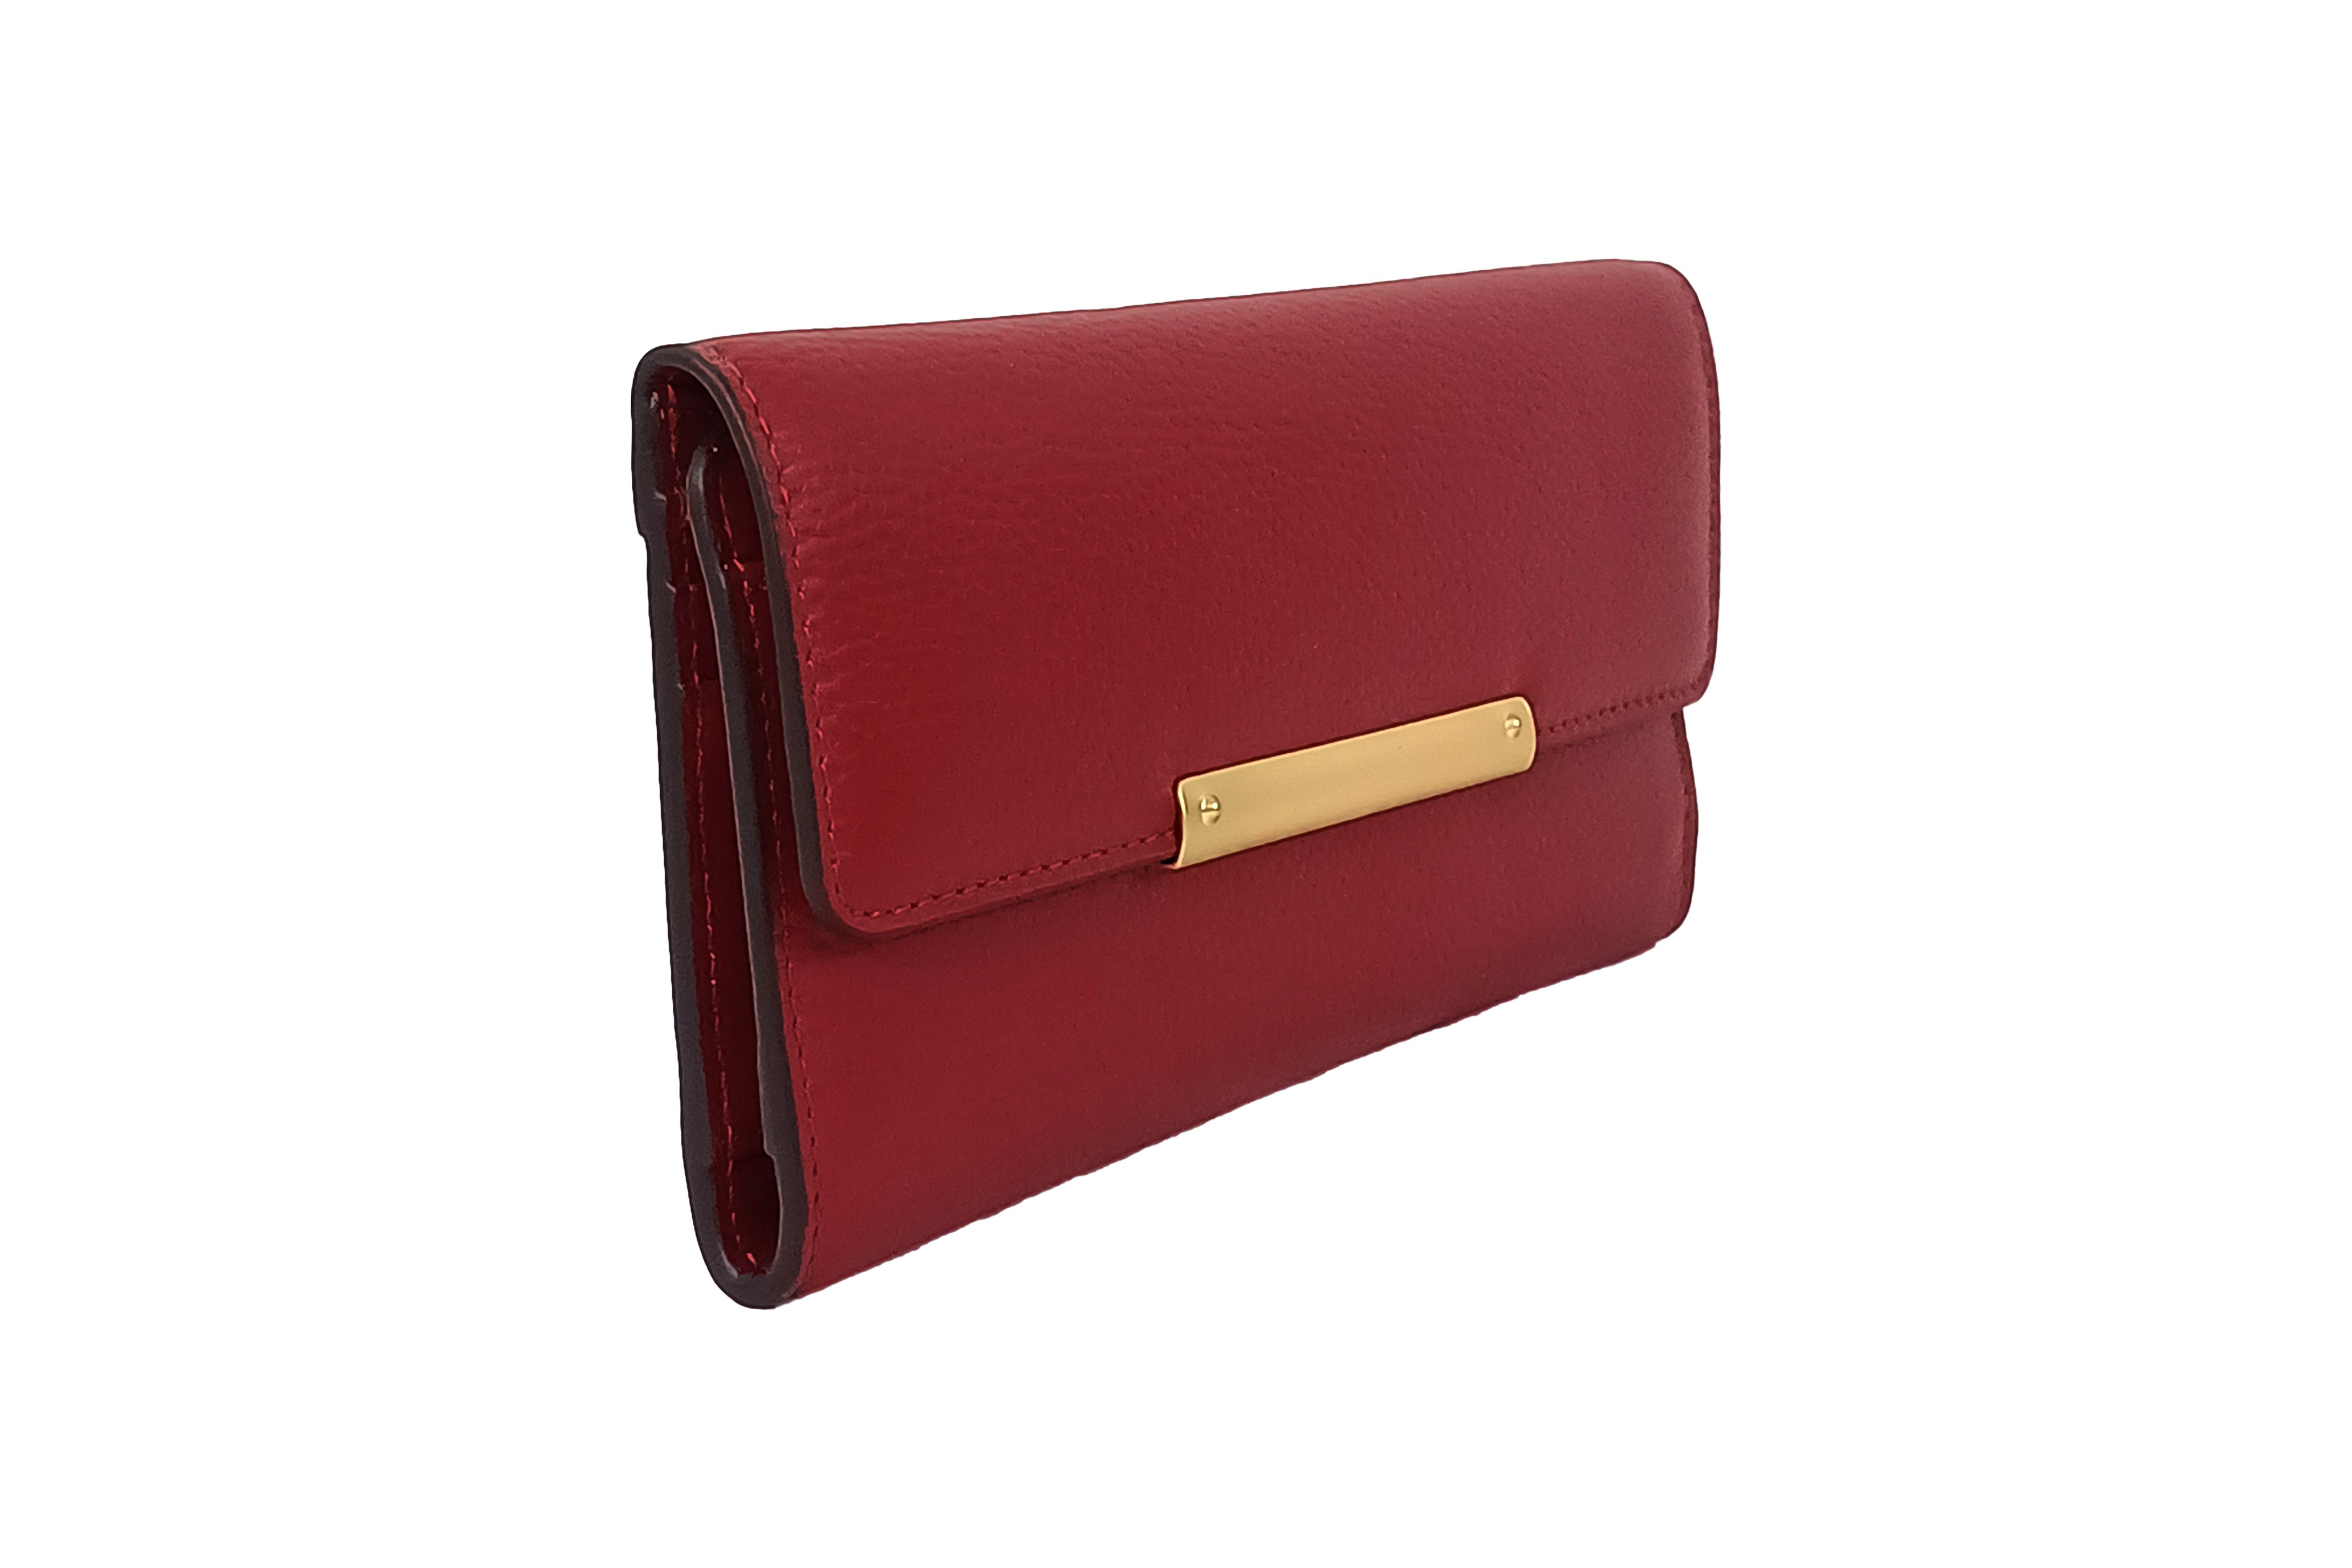  Shop now & Flaunt Style with Dreya Large Flap Wallet | Lodis